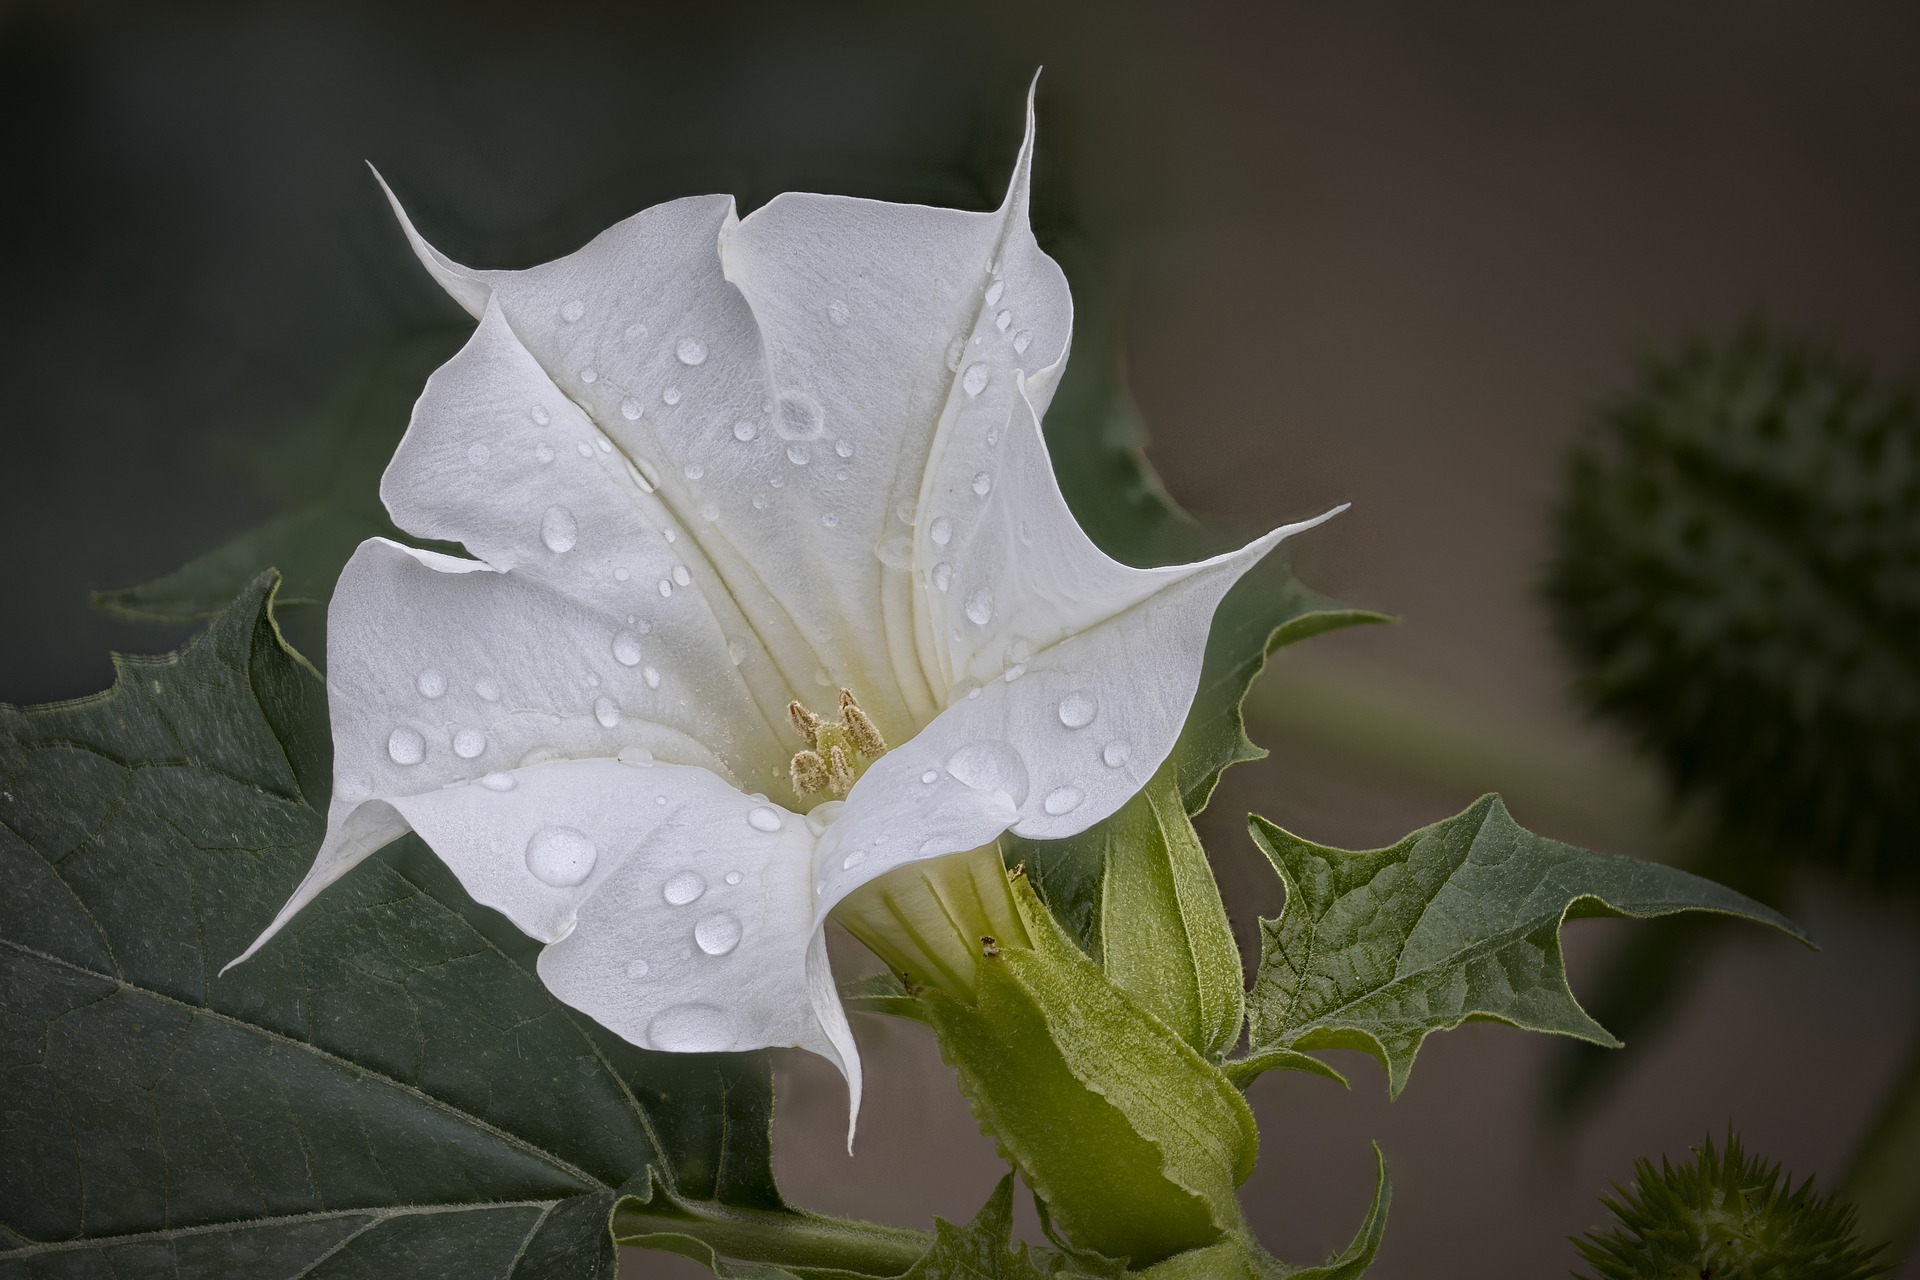 Photograph of Jimsonweed flower with raindrops